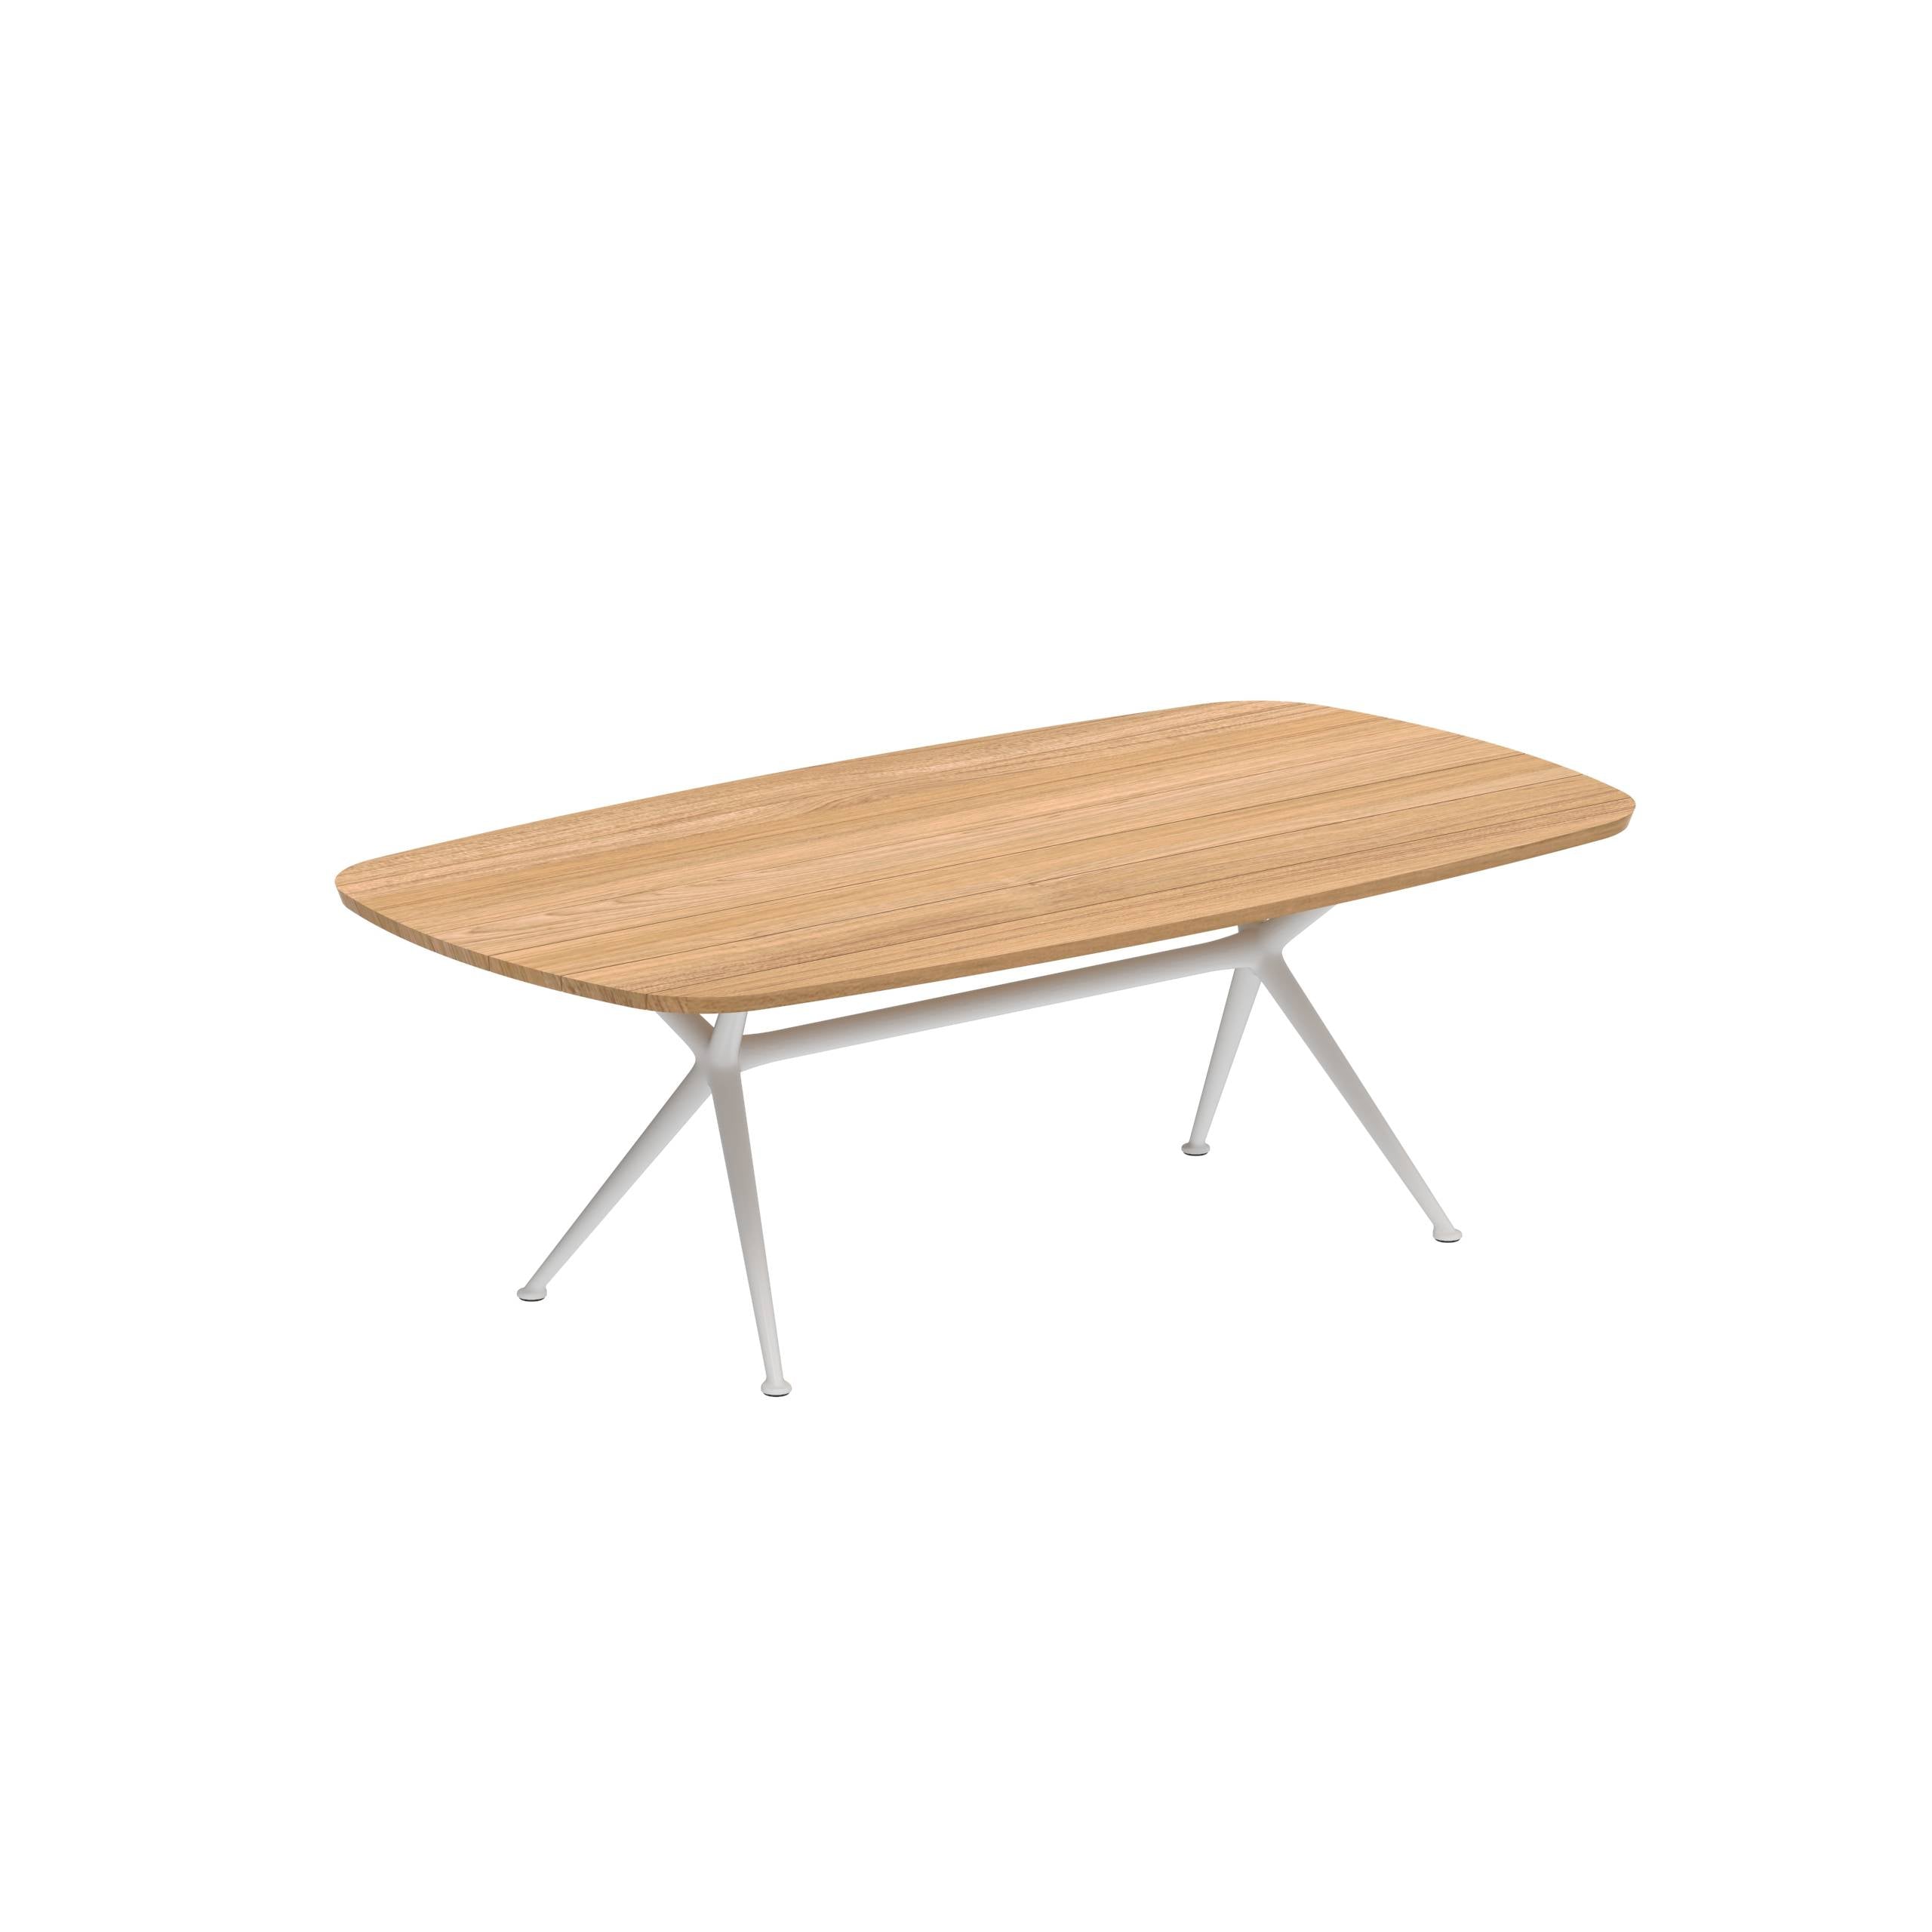 Exes Table 220x120cm Alu Legs White - Teak Table Top